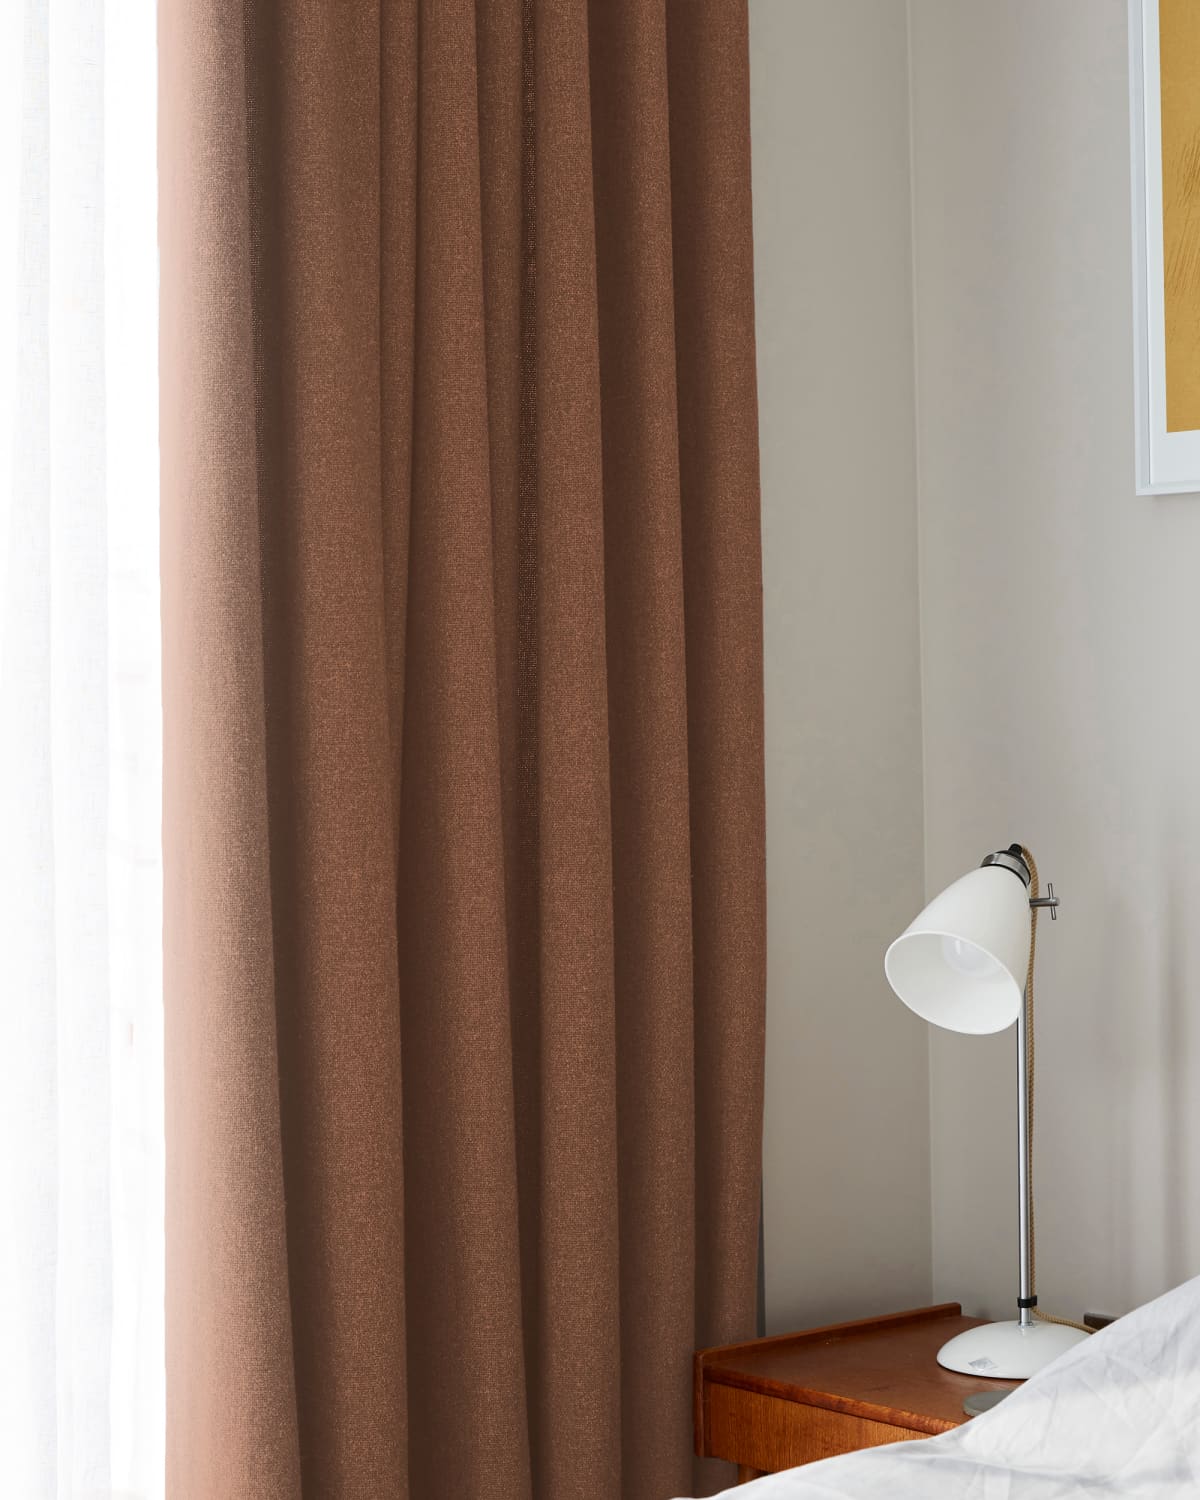 orange bedroom curtains